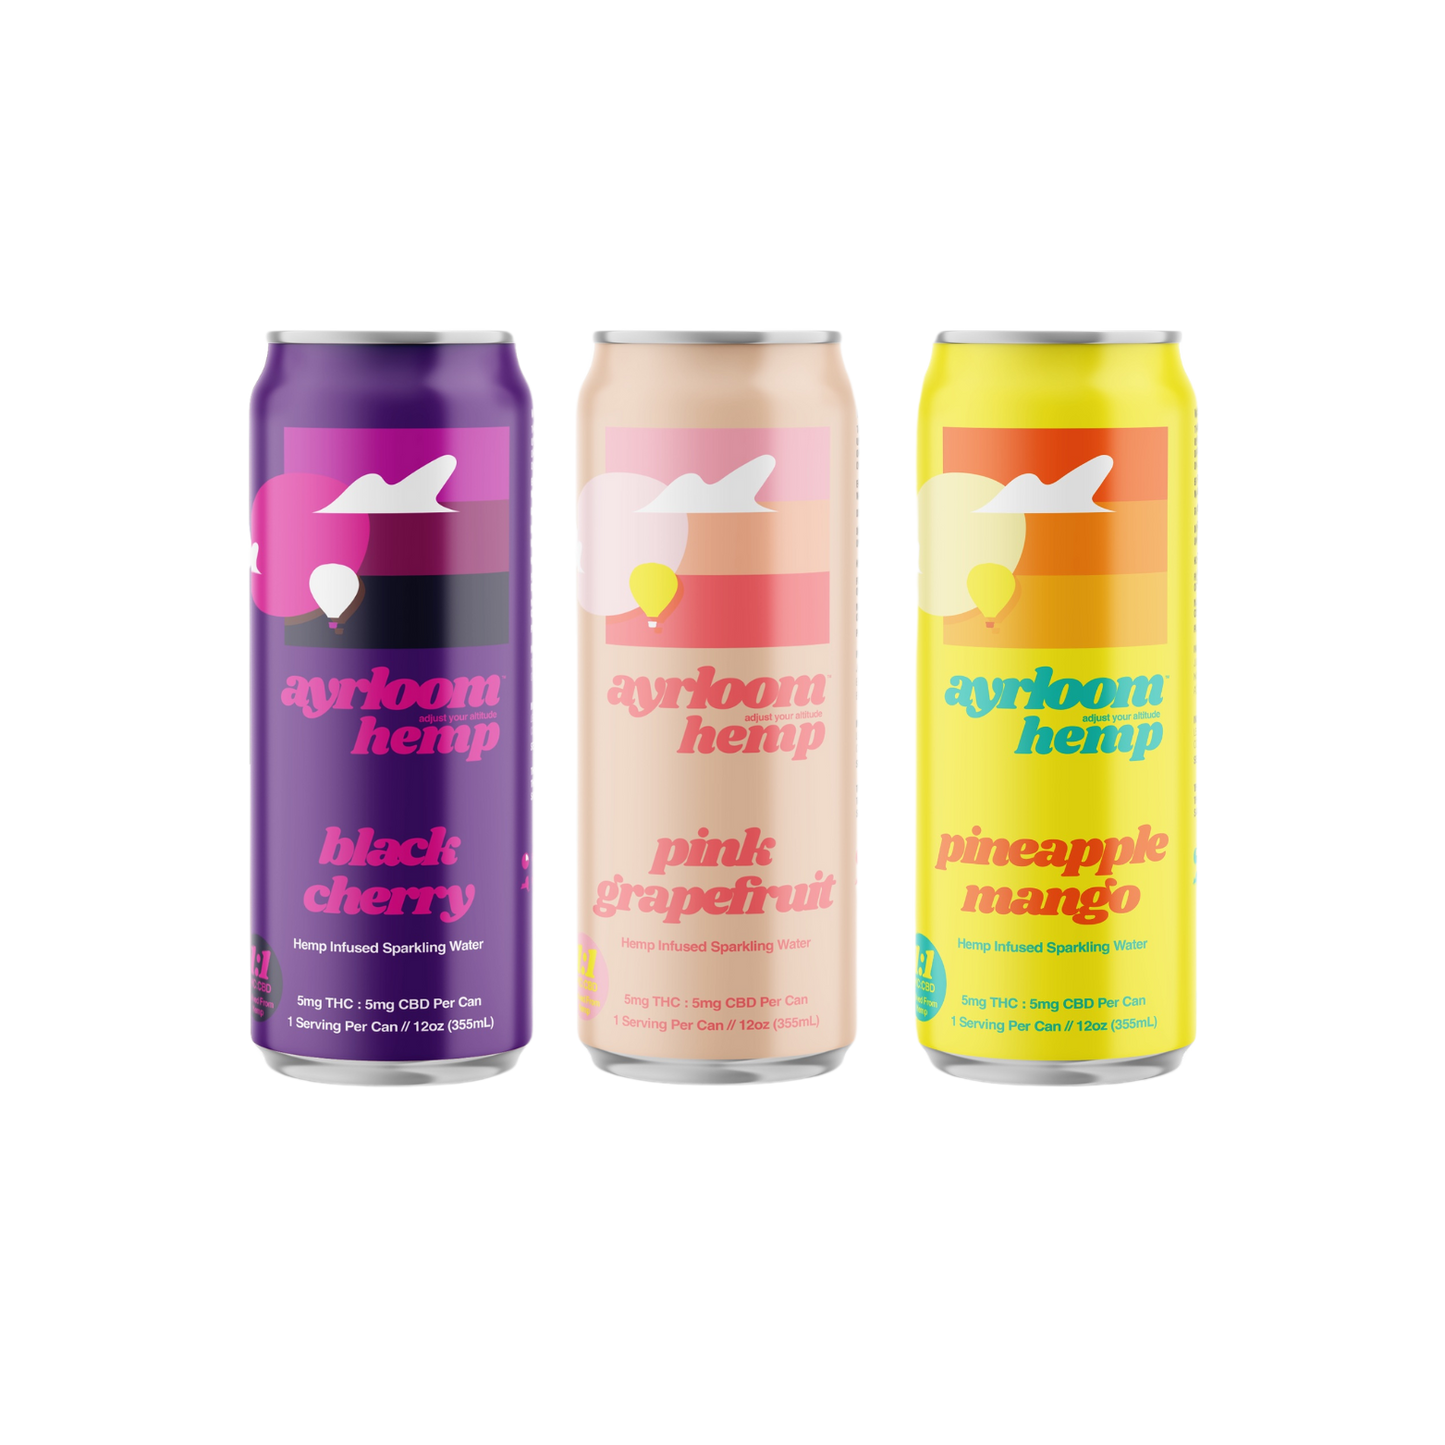 
                  
                    ayrloom ™ Hemp Sparkling Water Variety Pack
                  
                